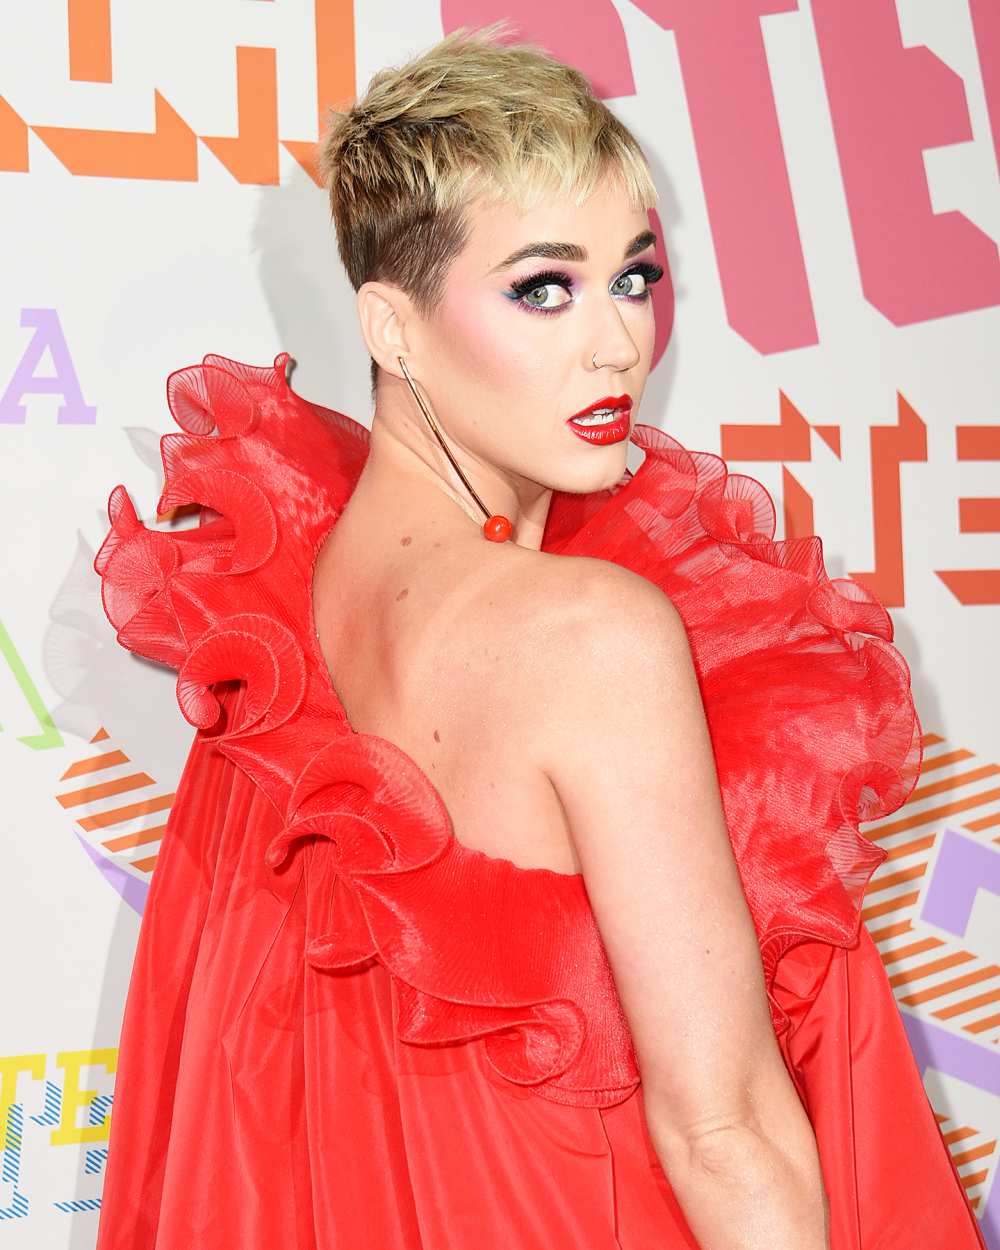 Katy Perry Shoots Down Plastic Surgery Rumors